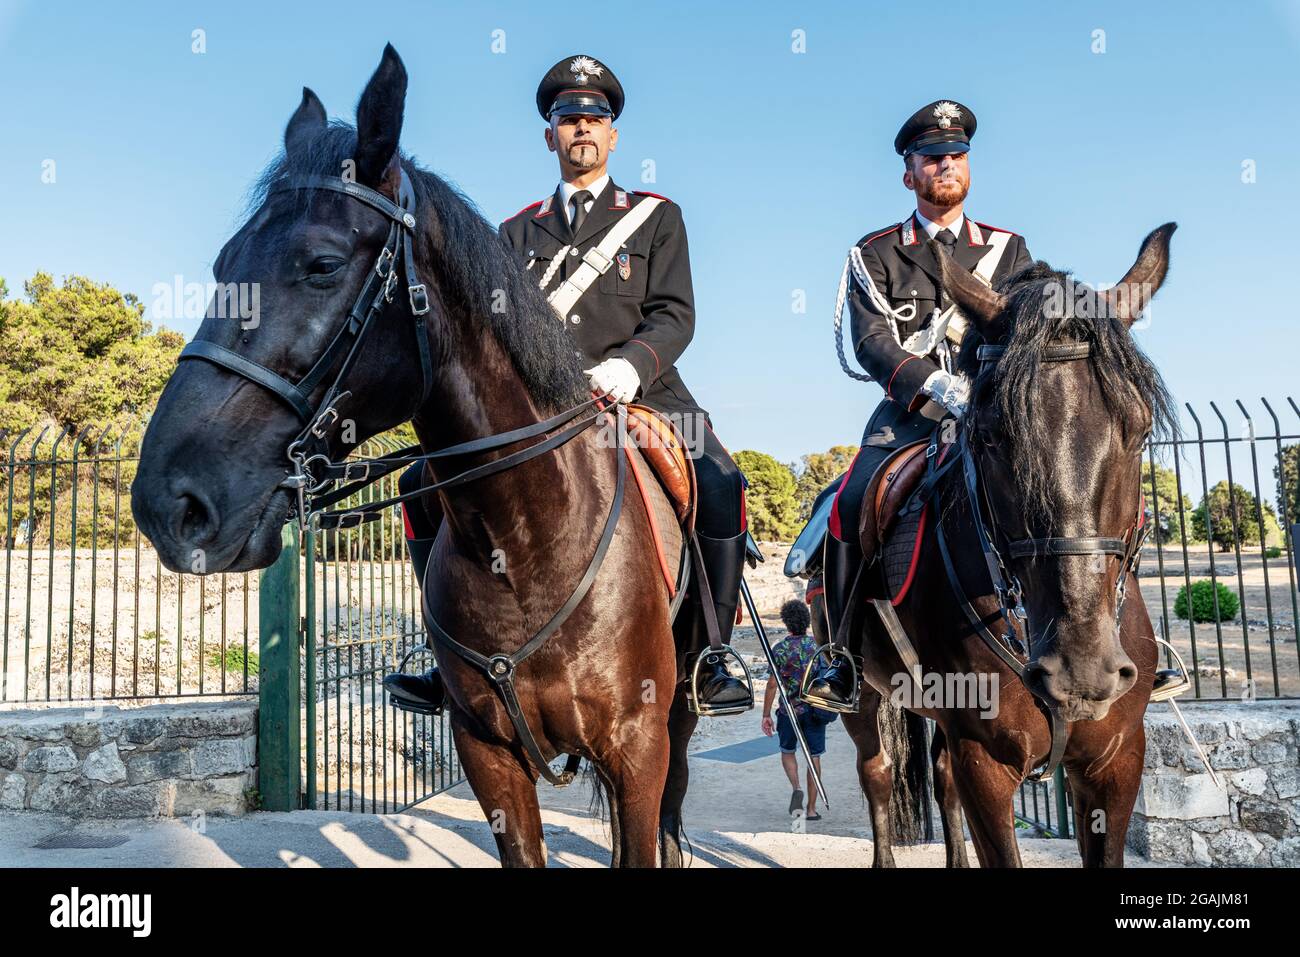 Syracuse Sicily Italy - july 22 2021: Two proud carabinieri on horseback inside the archaeological park of Neapolis Stock Photo